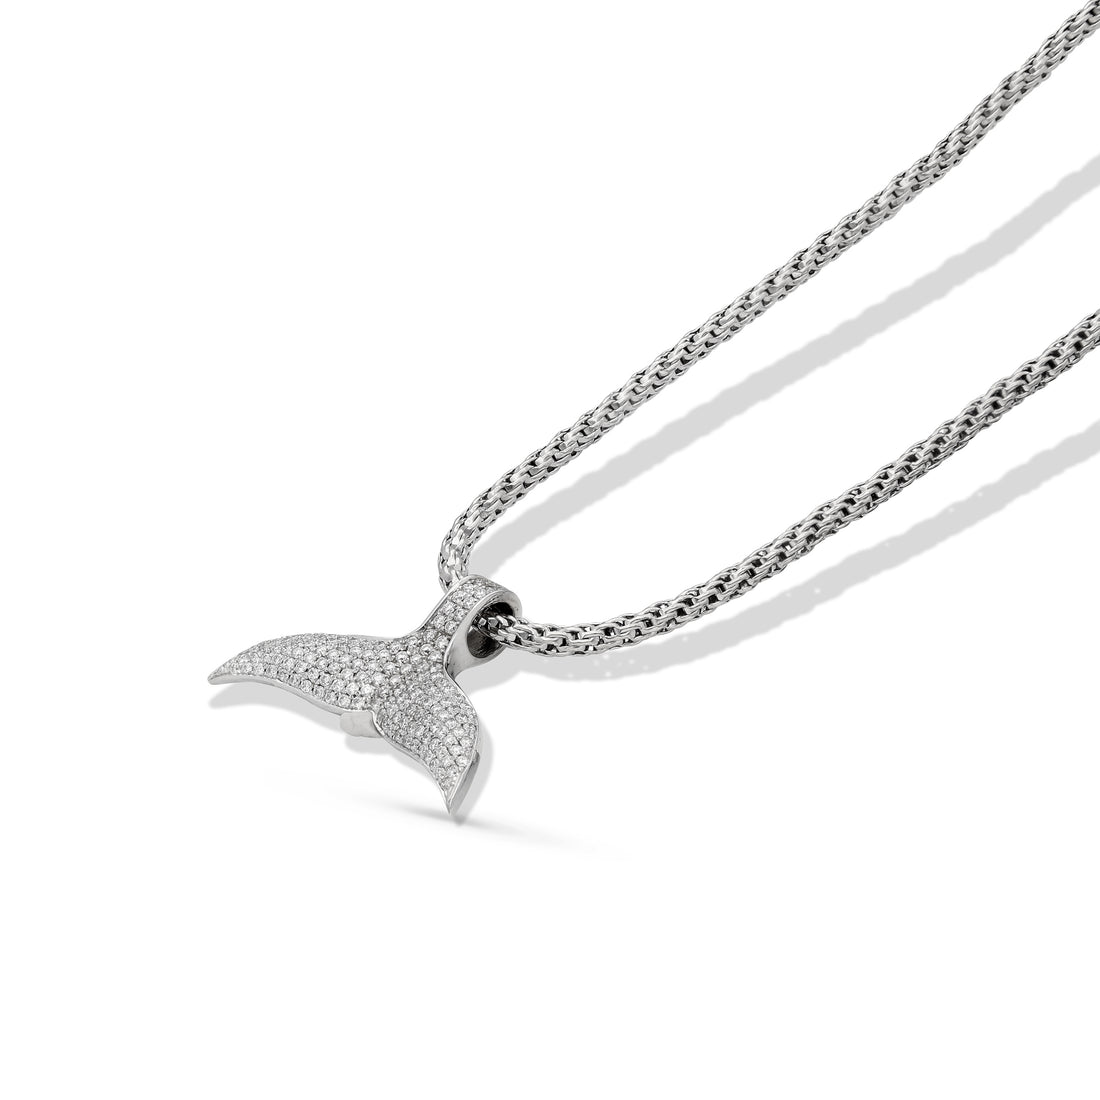 Diamond Pave Fishtail Pendant Necklace - 1.1 Carat